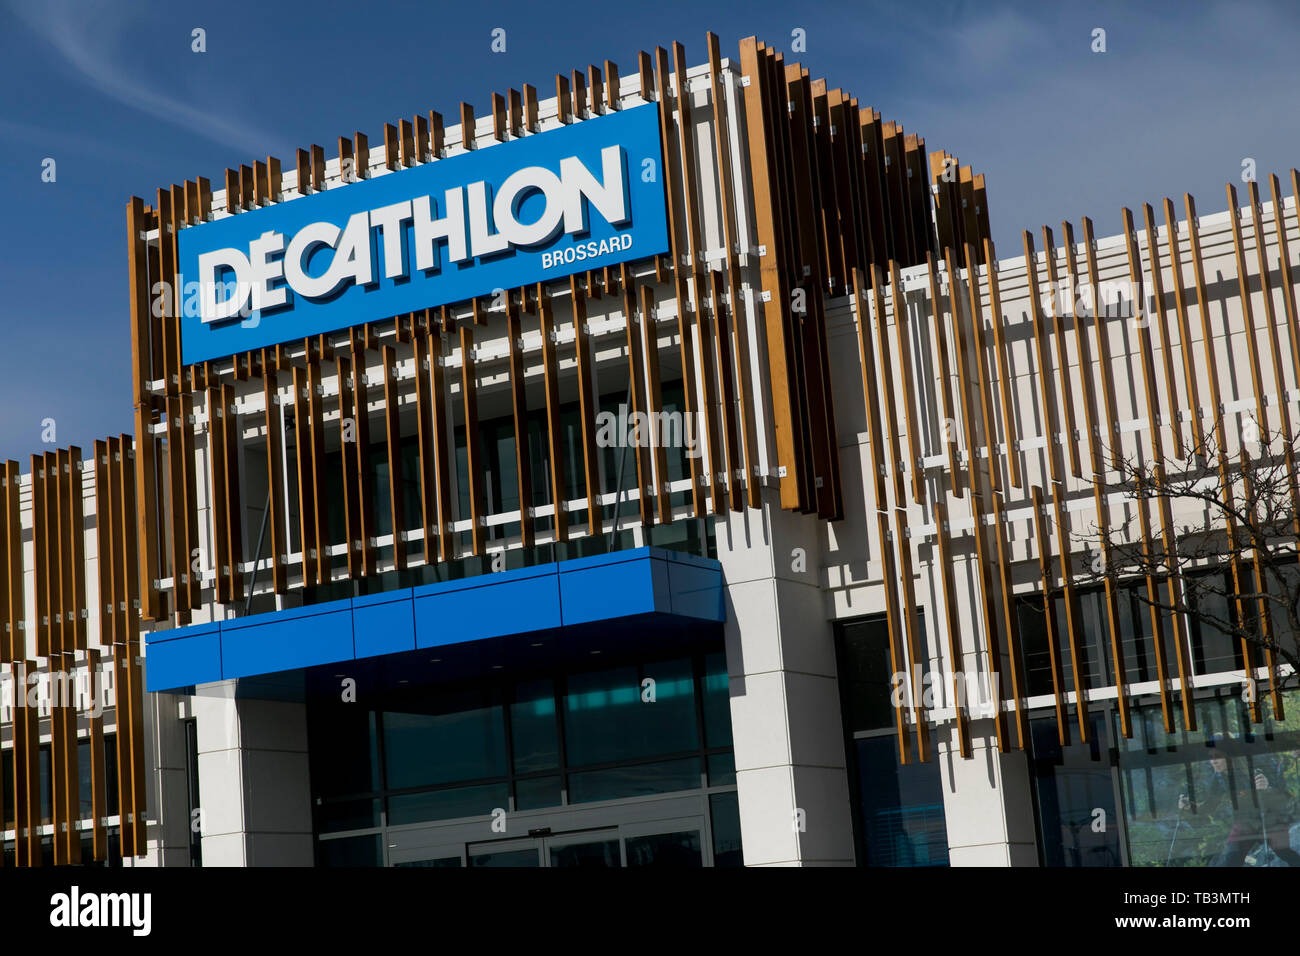 location of decathlon